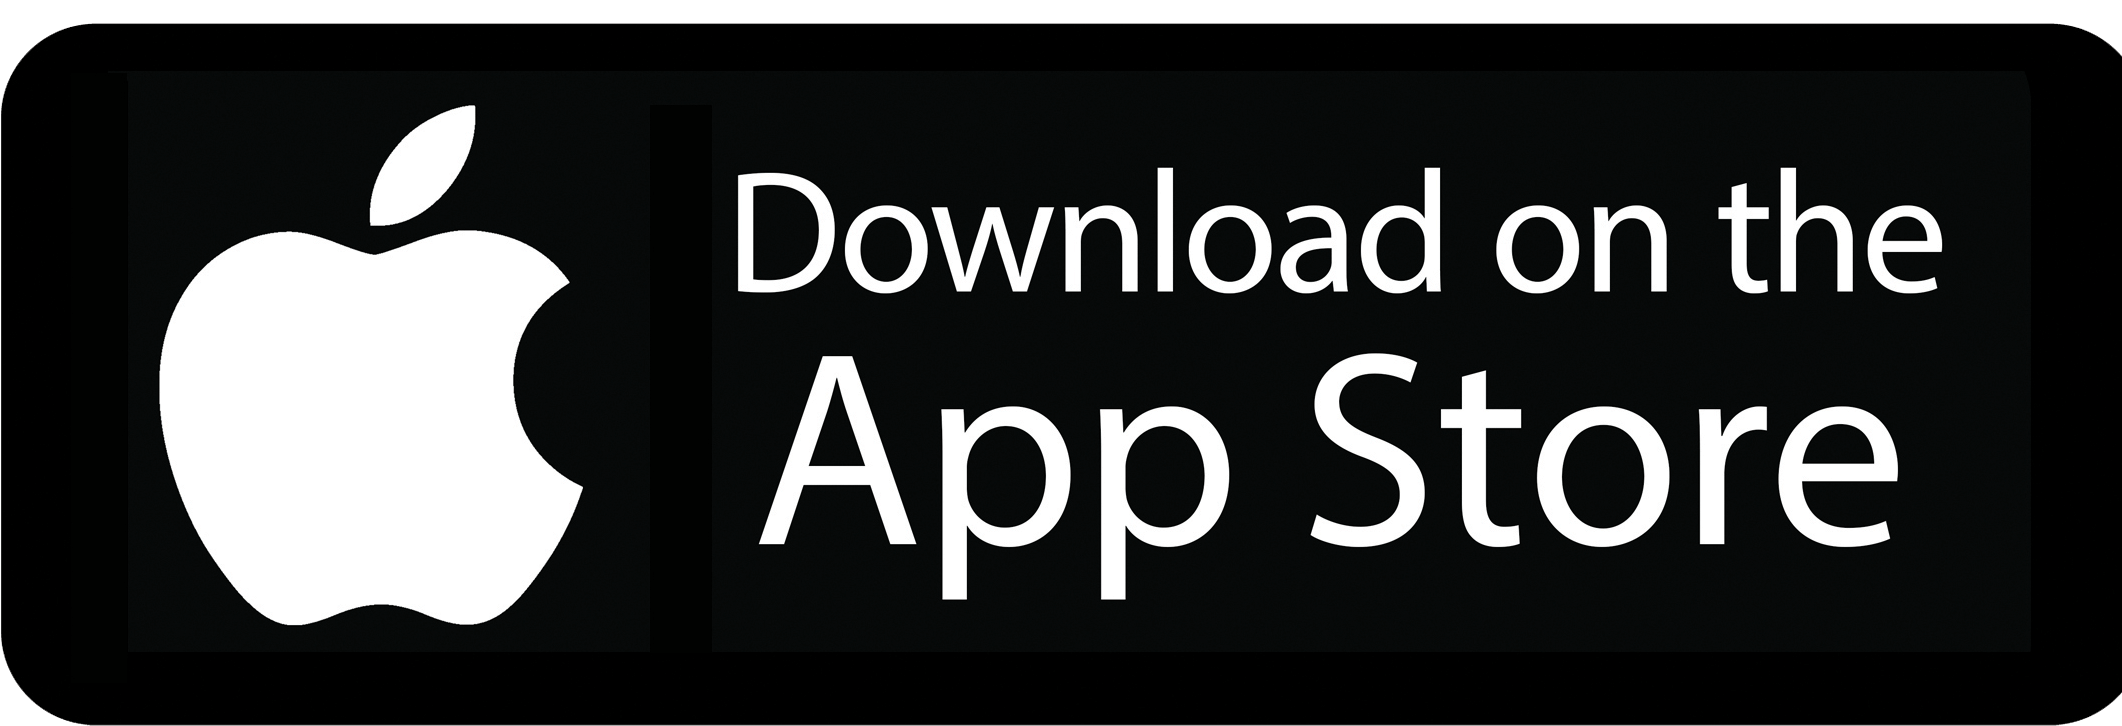 238-2388525_download-button-transparent-clipart-app-store-download-buttons-3